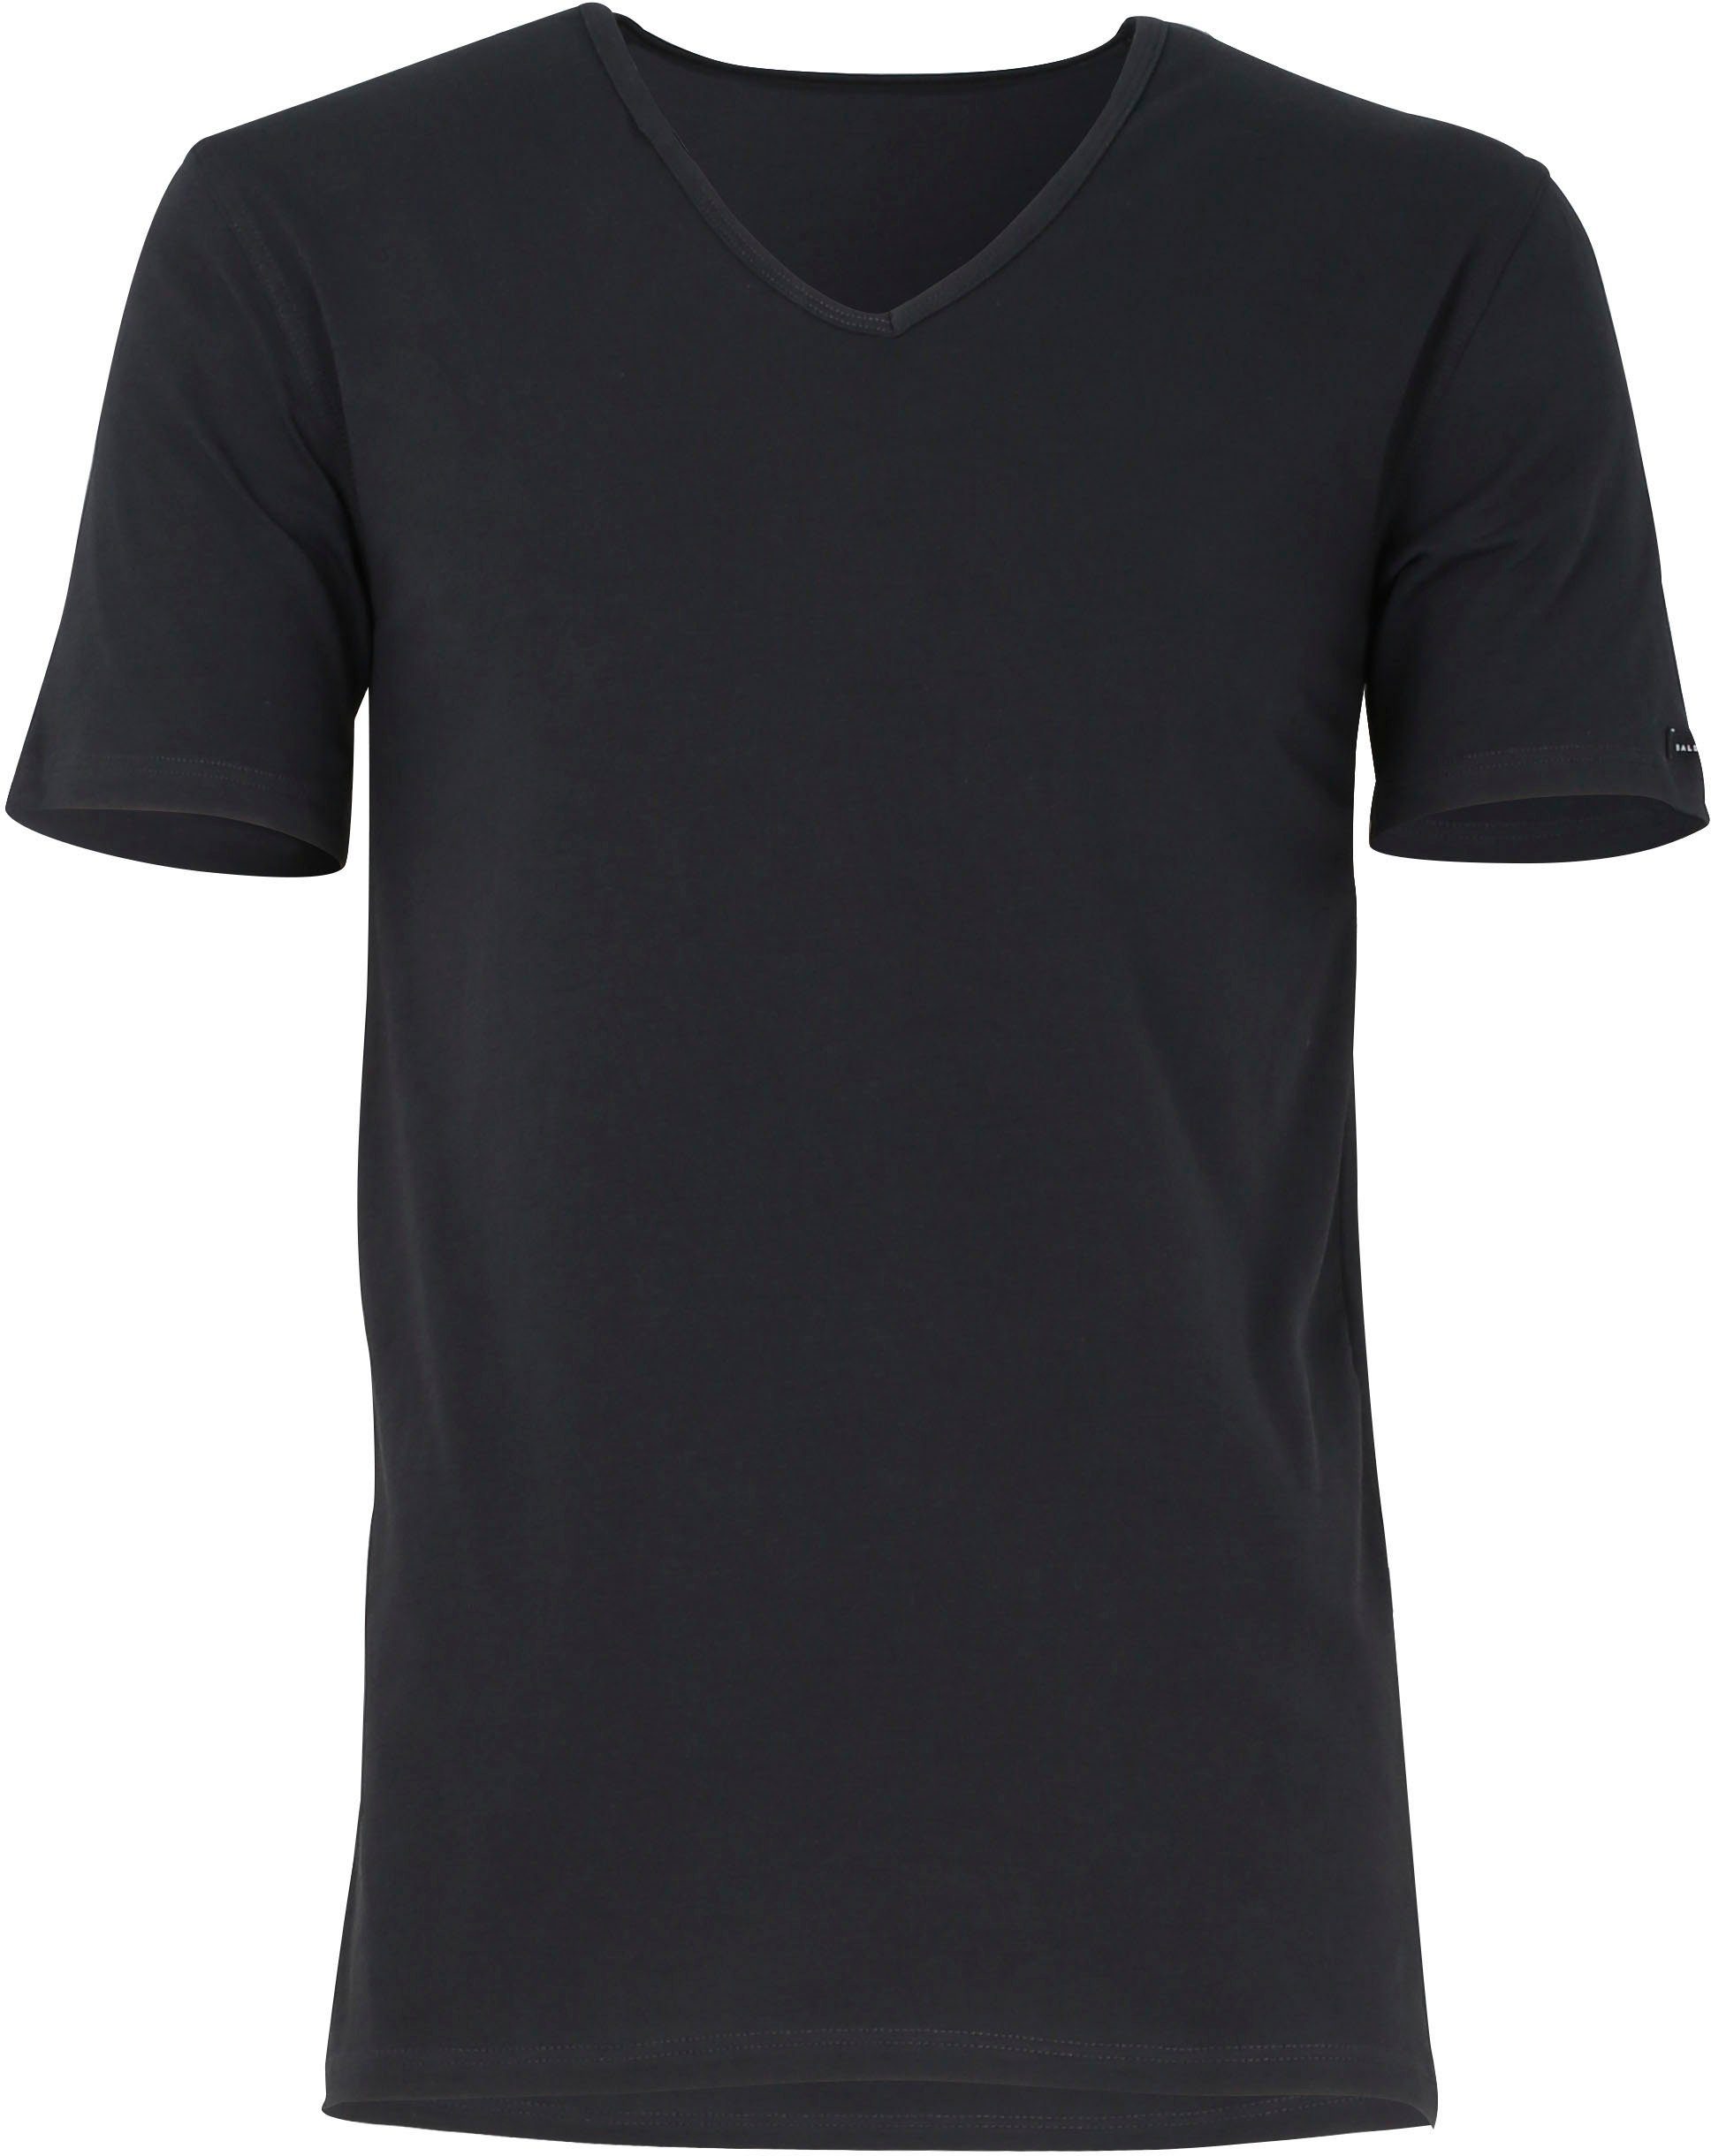 BALDESSARINI Unterhemd 1/2, schwarz-dunkel-uni V-Aussc Shirt